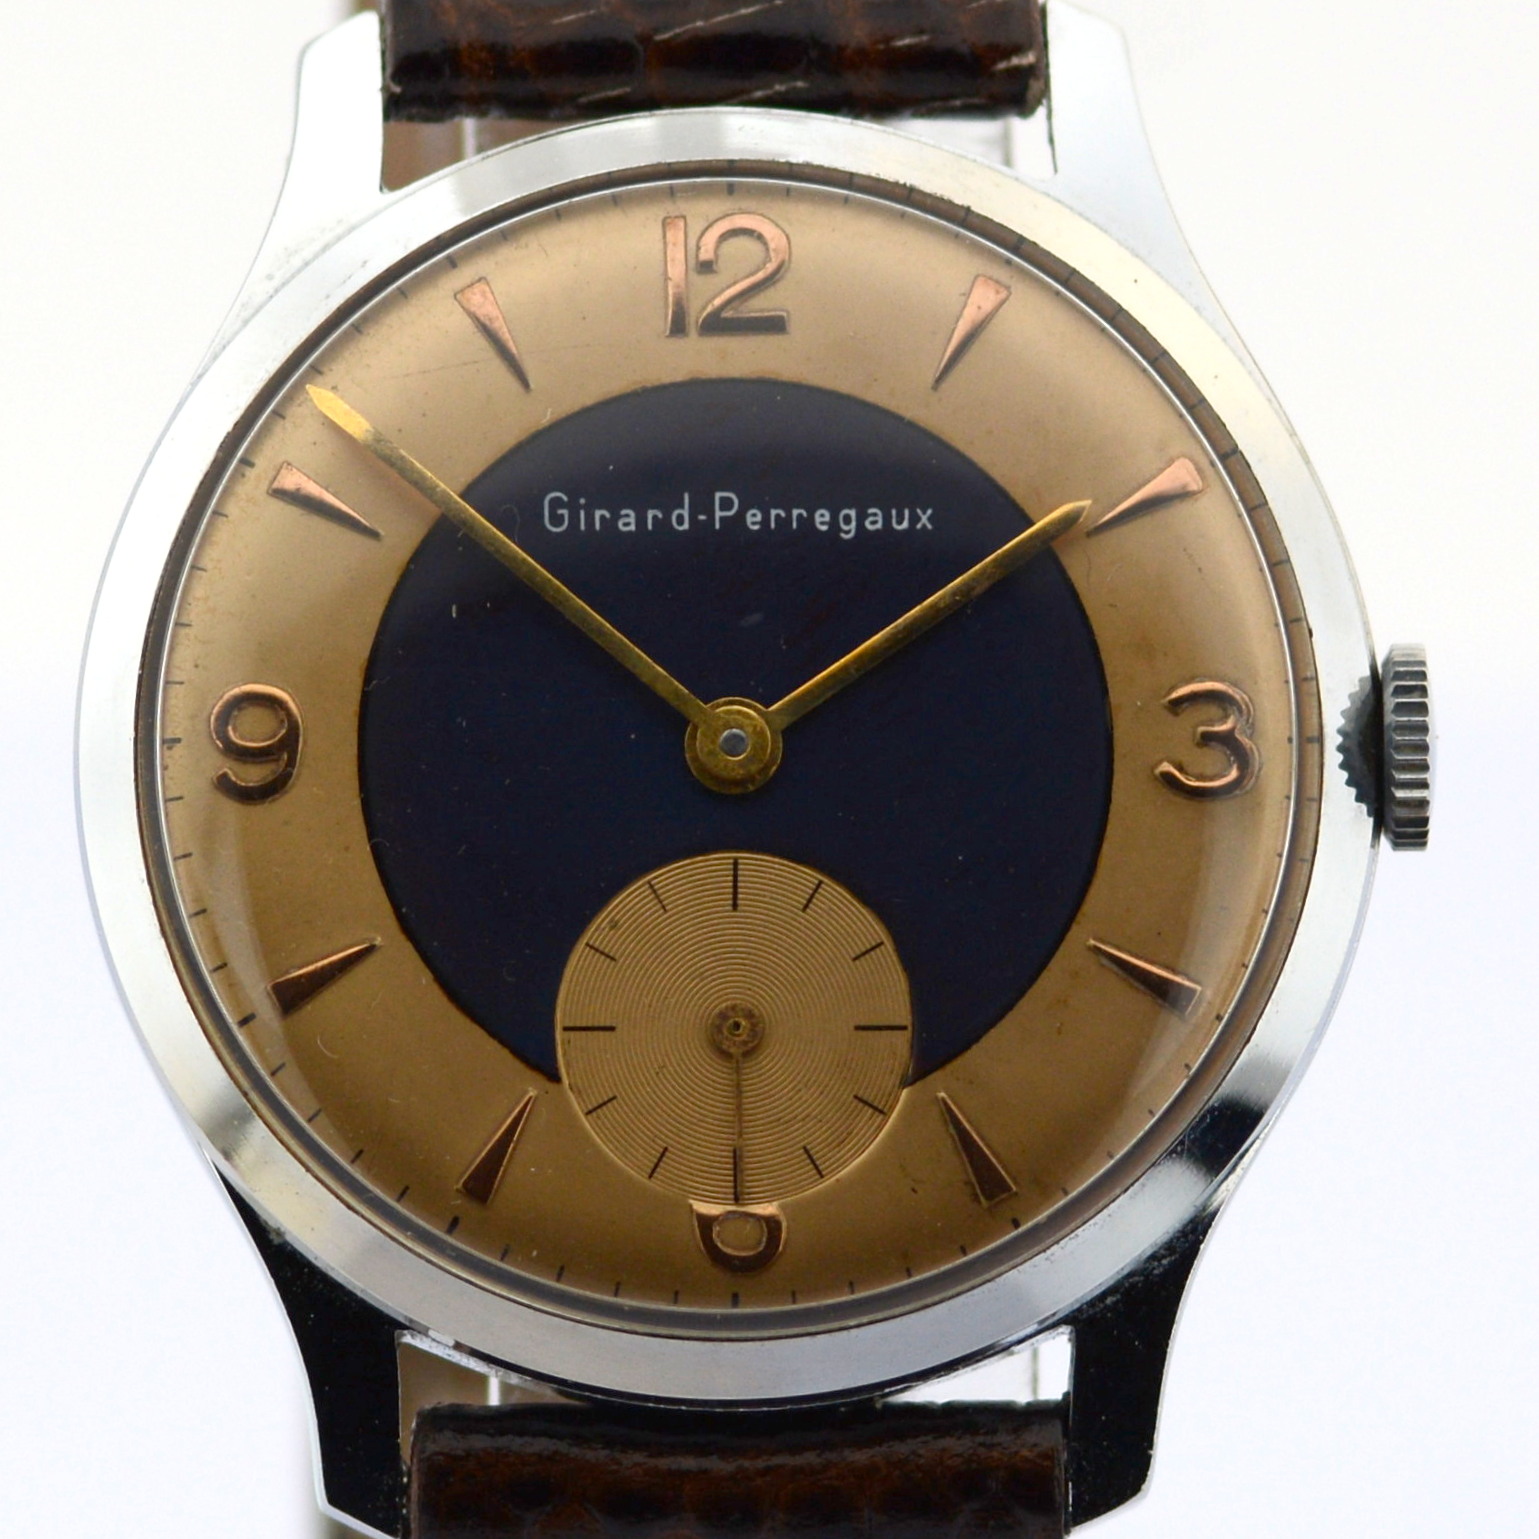 Girard-Perregaux / Vintage - Gentlmen's Steel Wrist Watch